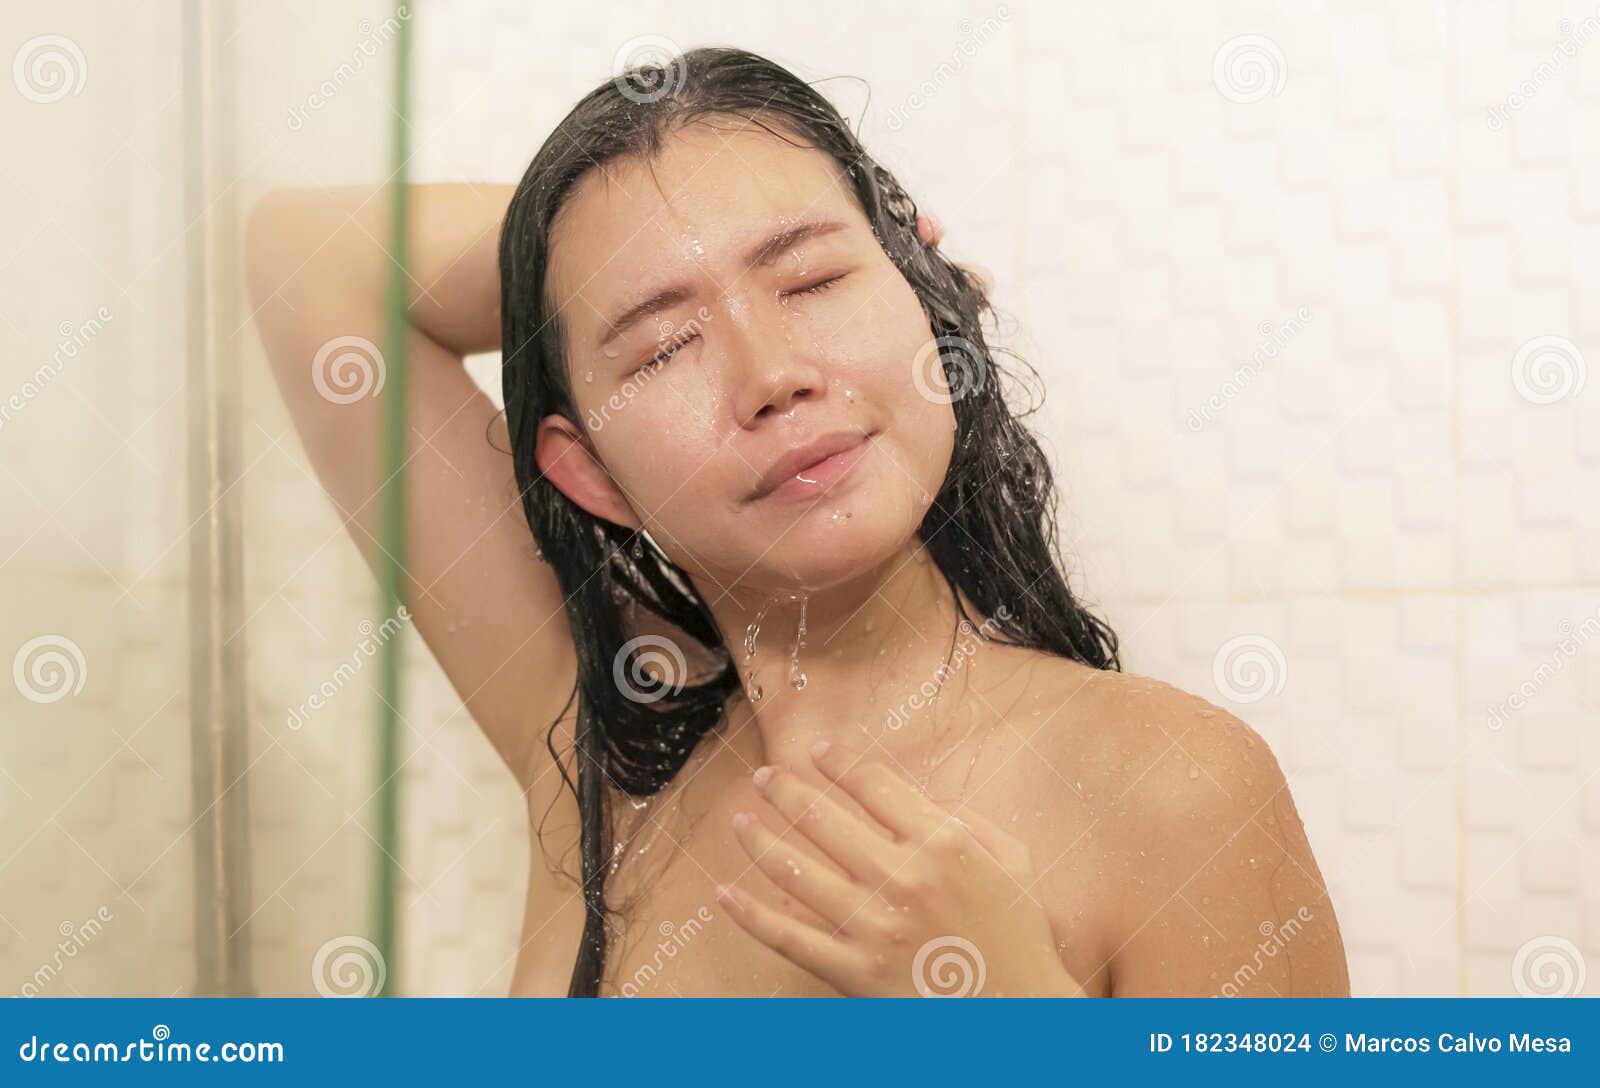 Pretty, young woman taking a long hot shower washing her 